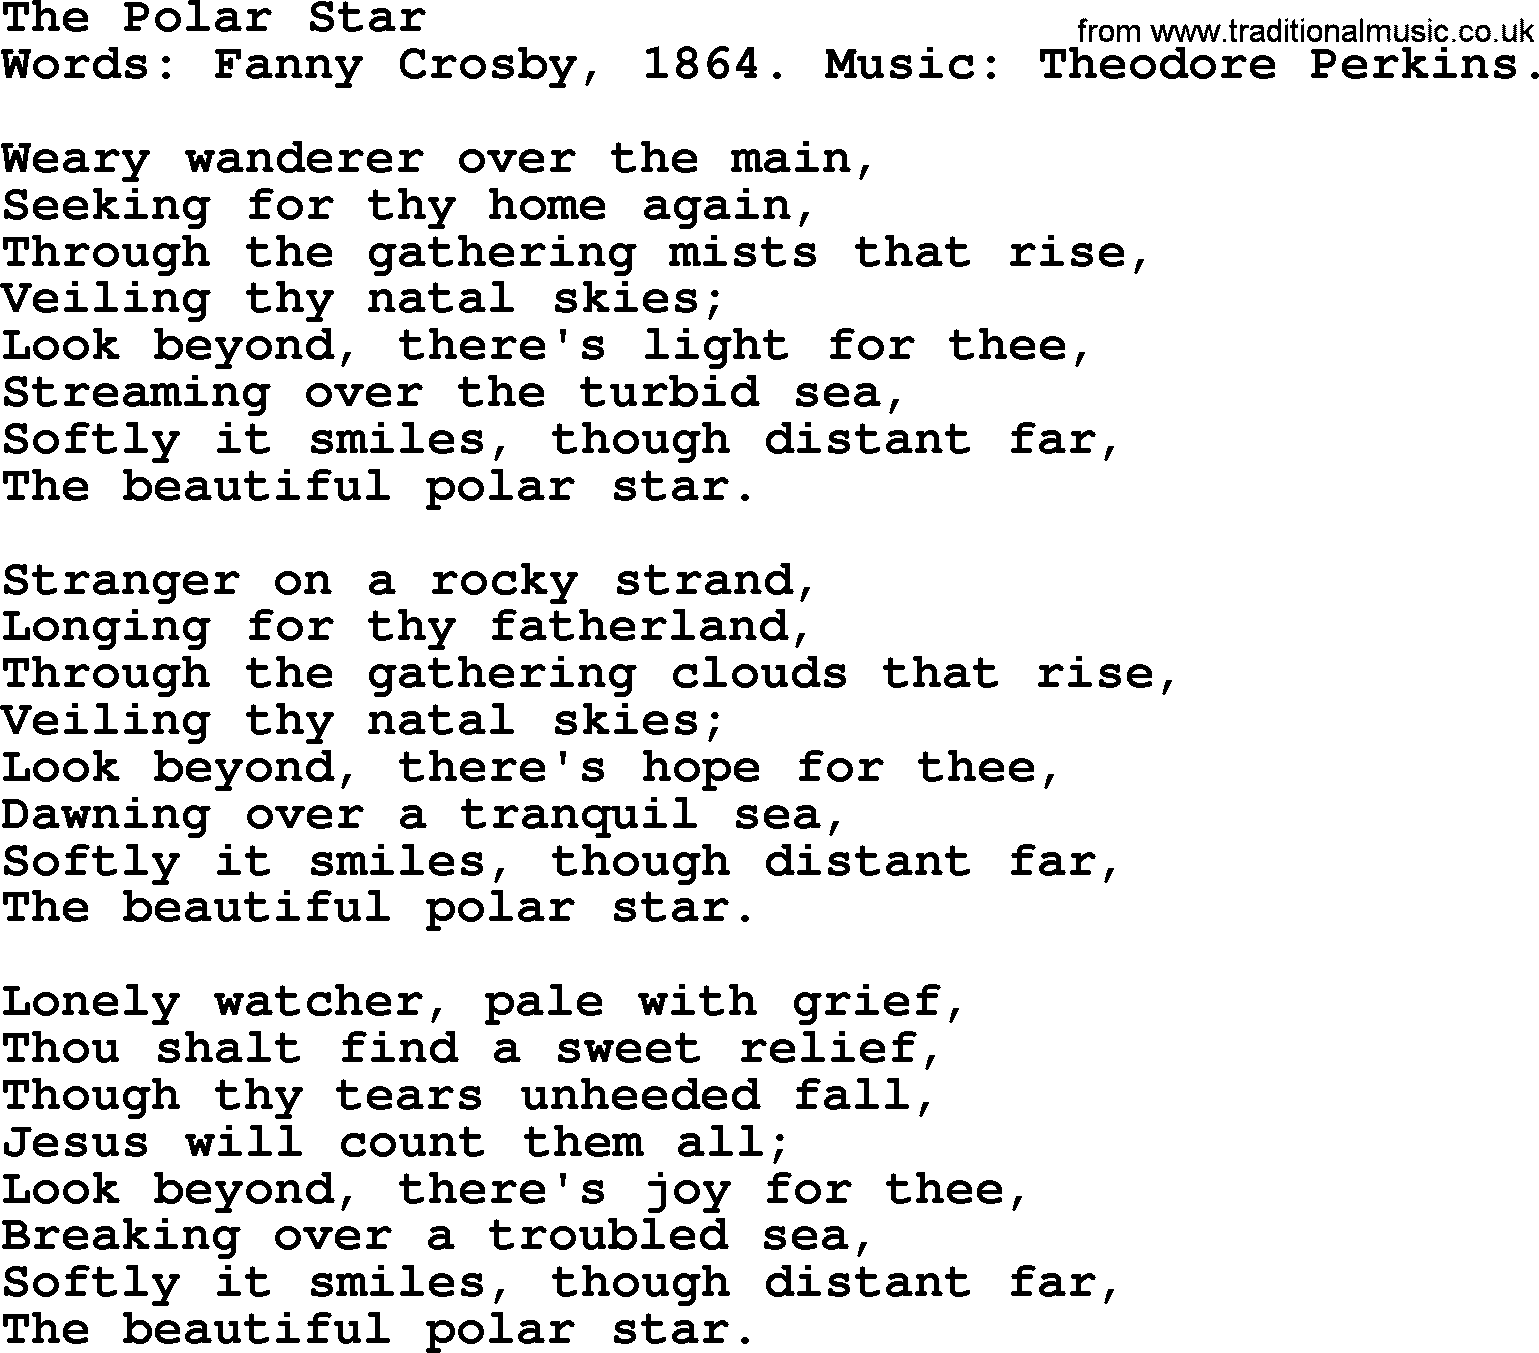 Fanny Crosby song: The Polar Star, lyrics